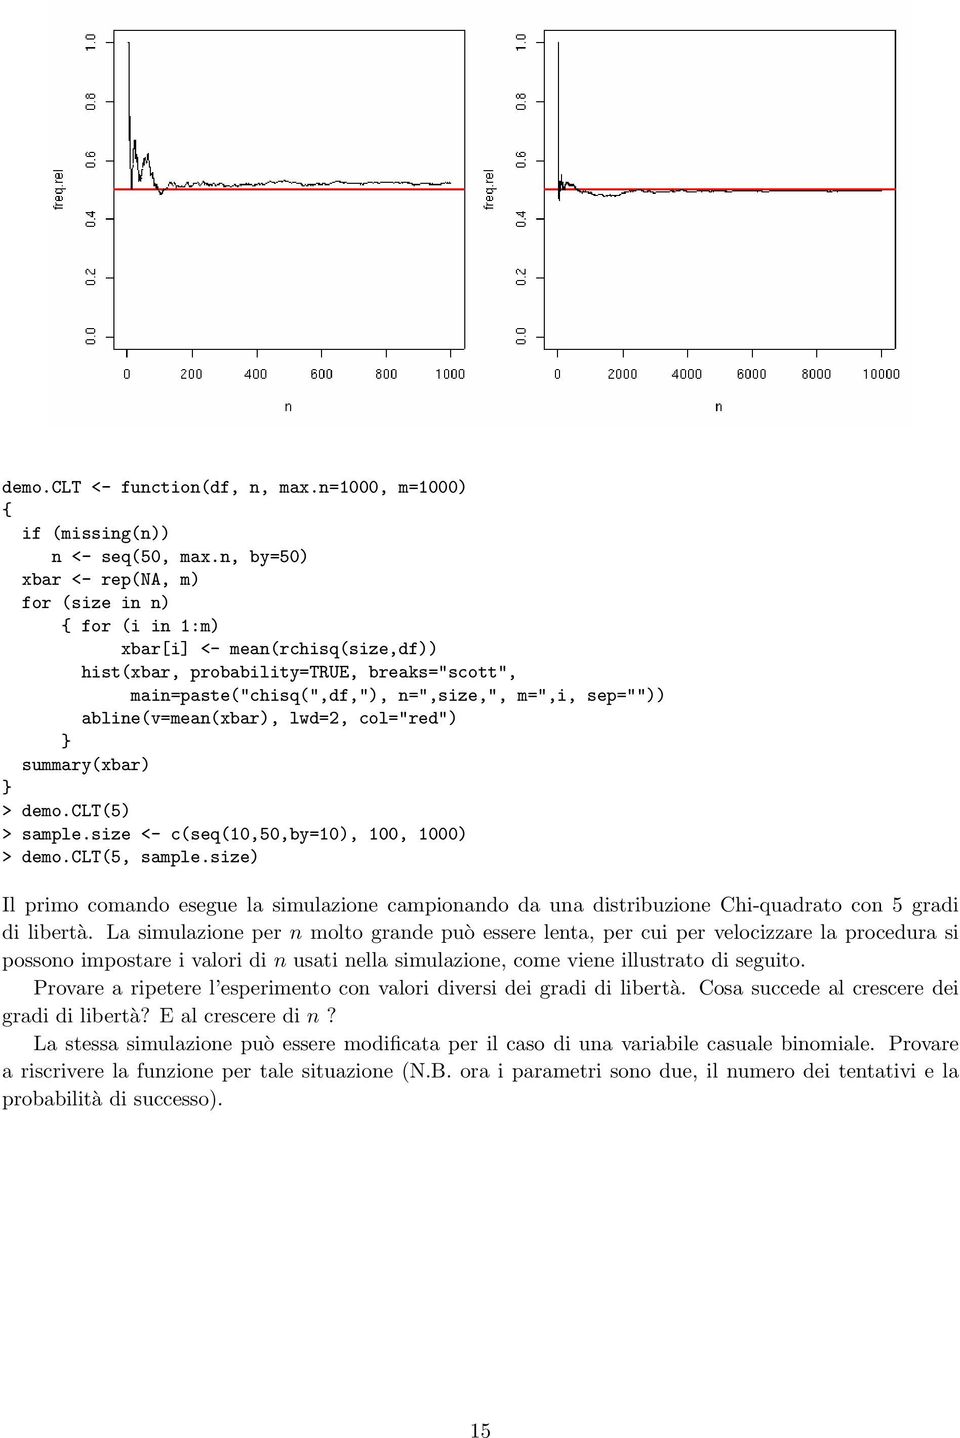 abline(v=mean(xbar), lwd=2, col="red") } summary(xbar) } > demo.clt(5) > sample.size <- c(seq(10,50,by=10), 100, 1000) > demo.clt(5, sample.